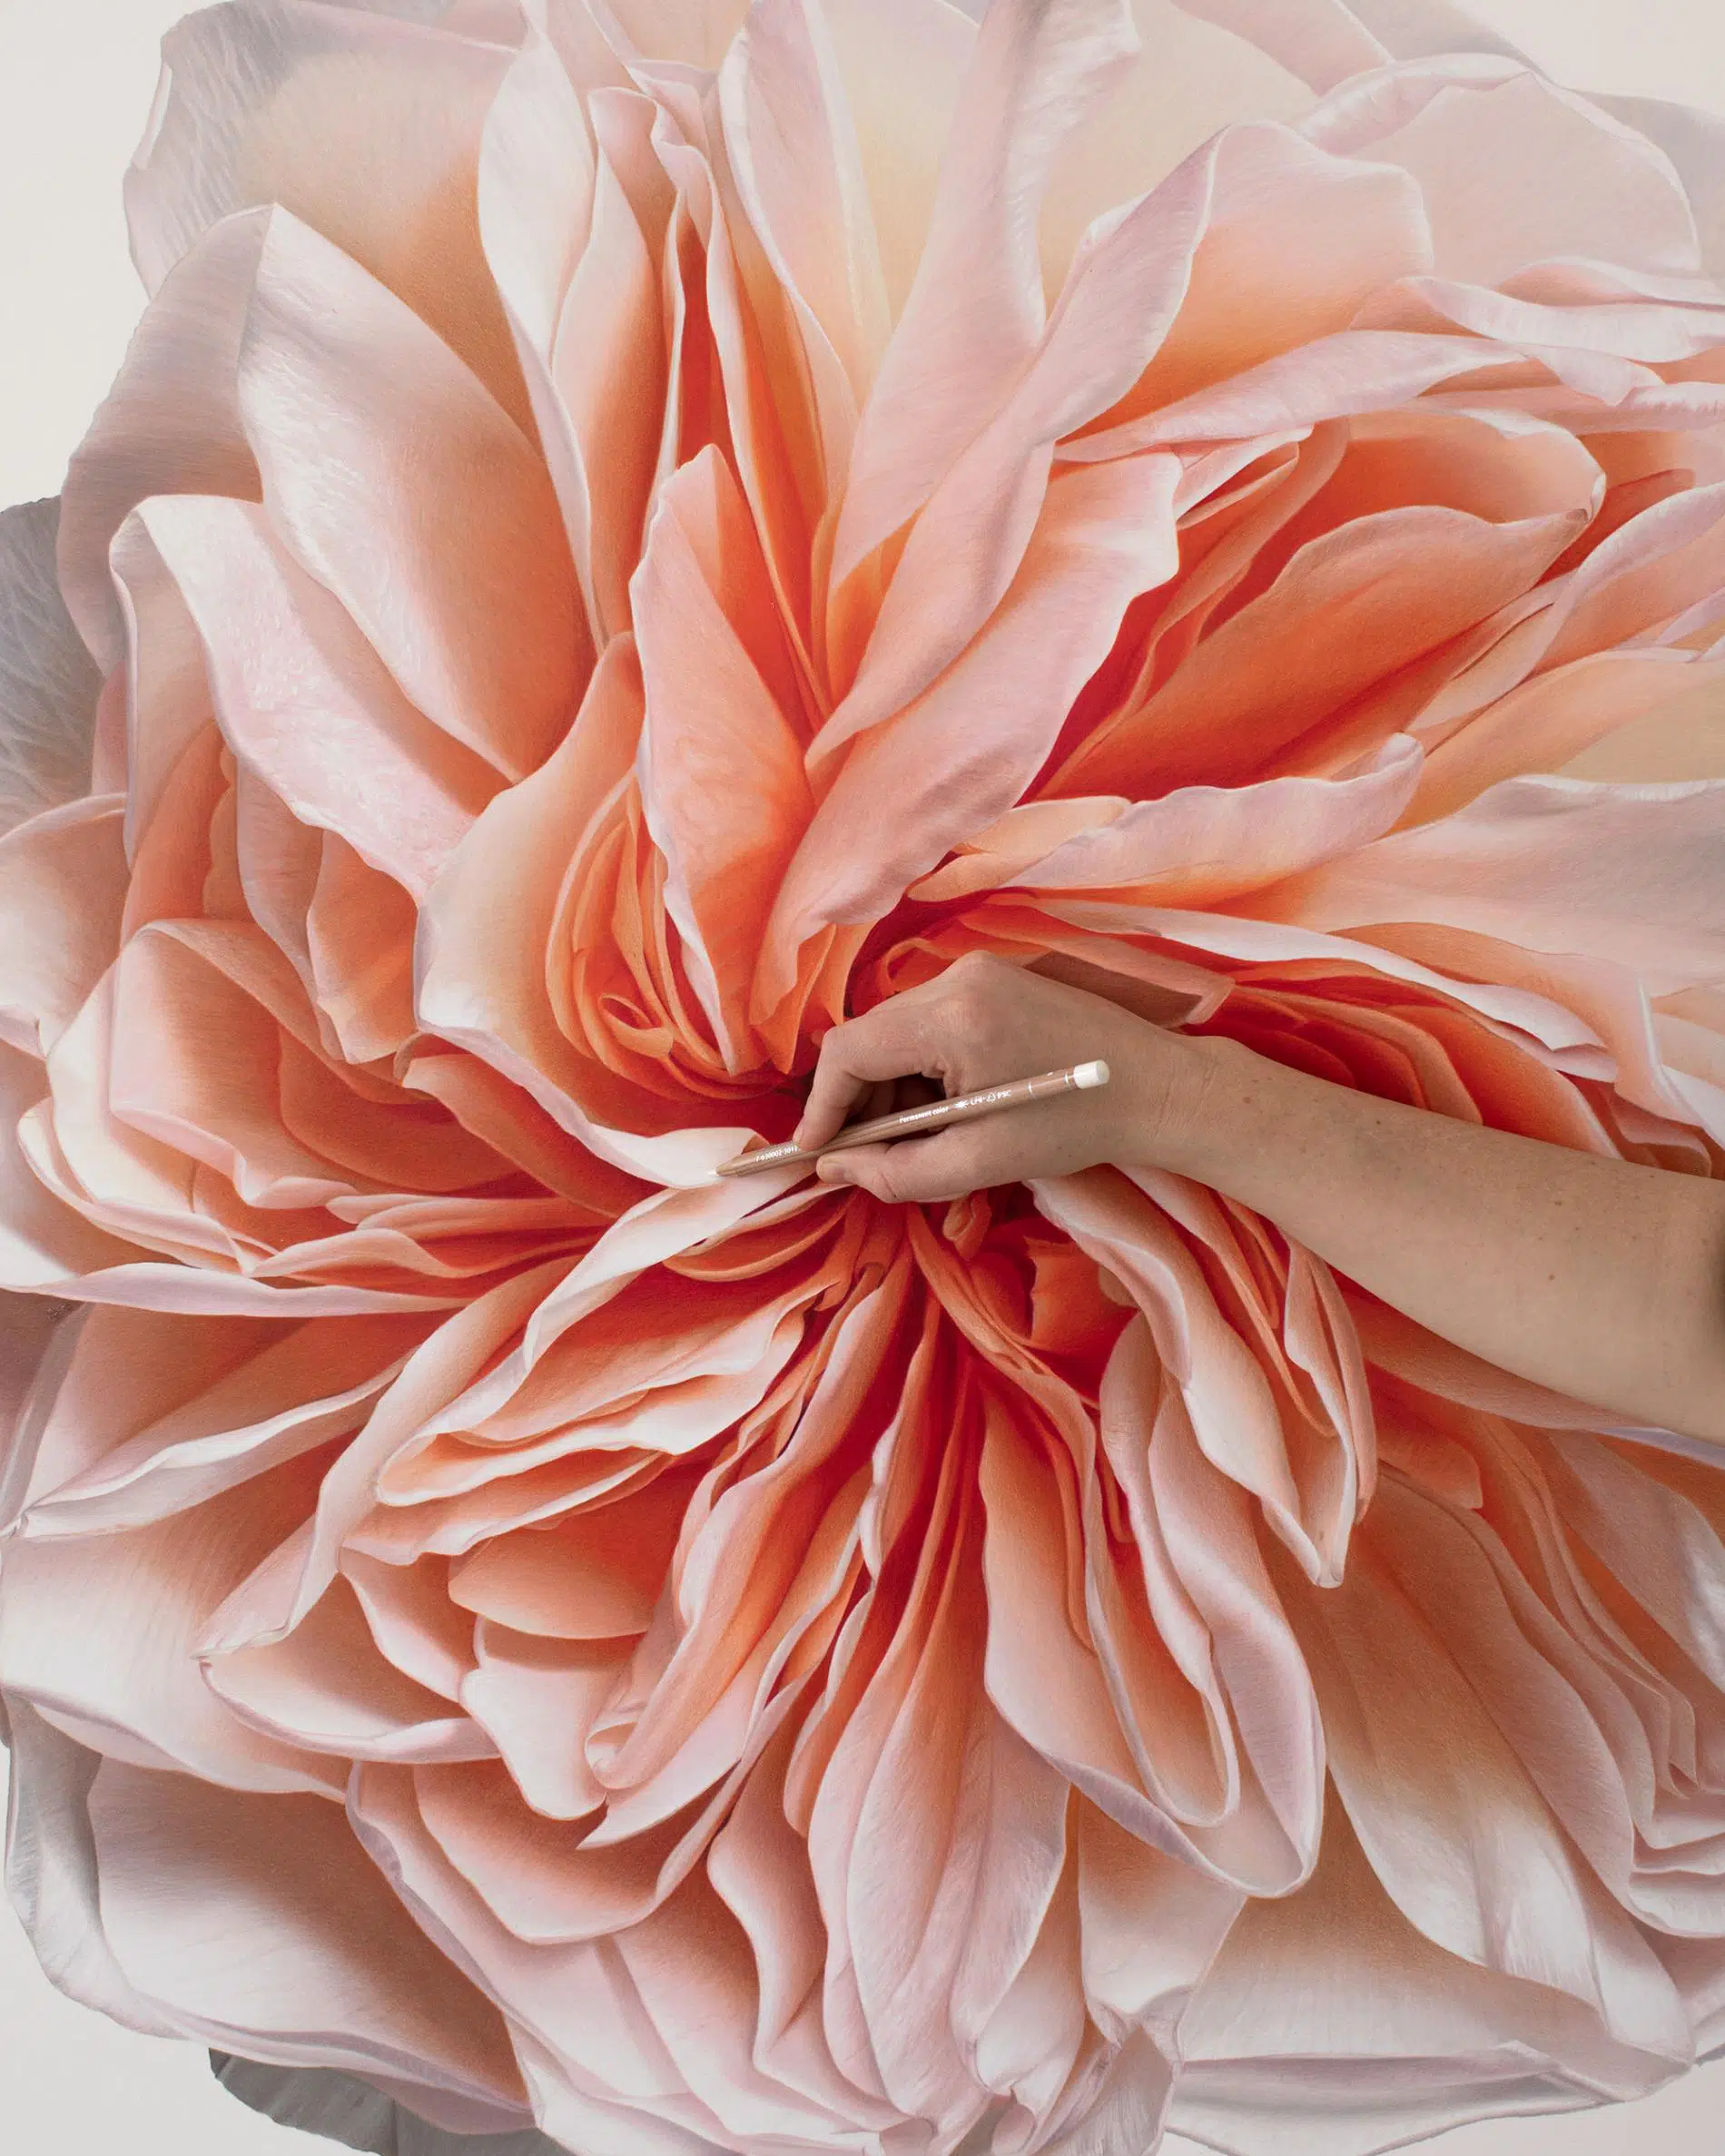 hendry flor bloom detalle peach rose